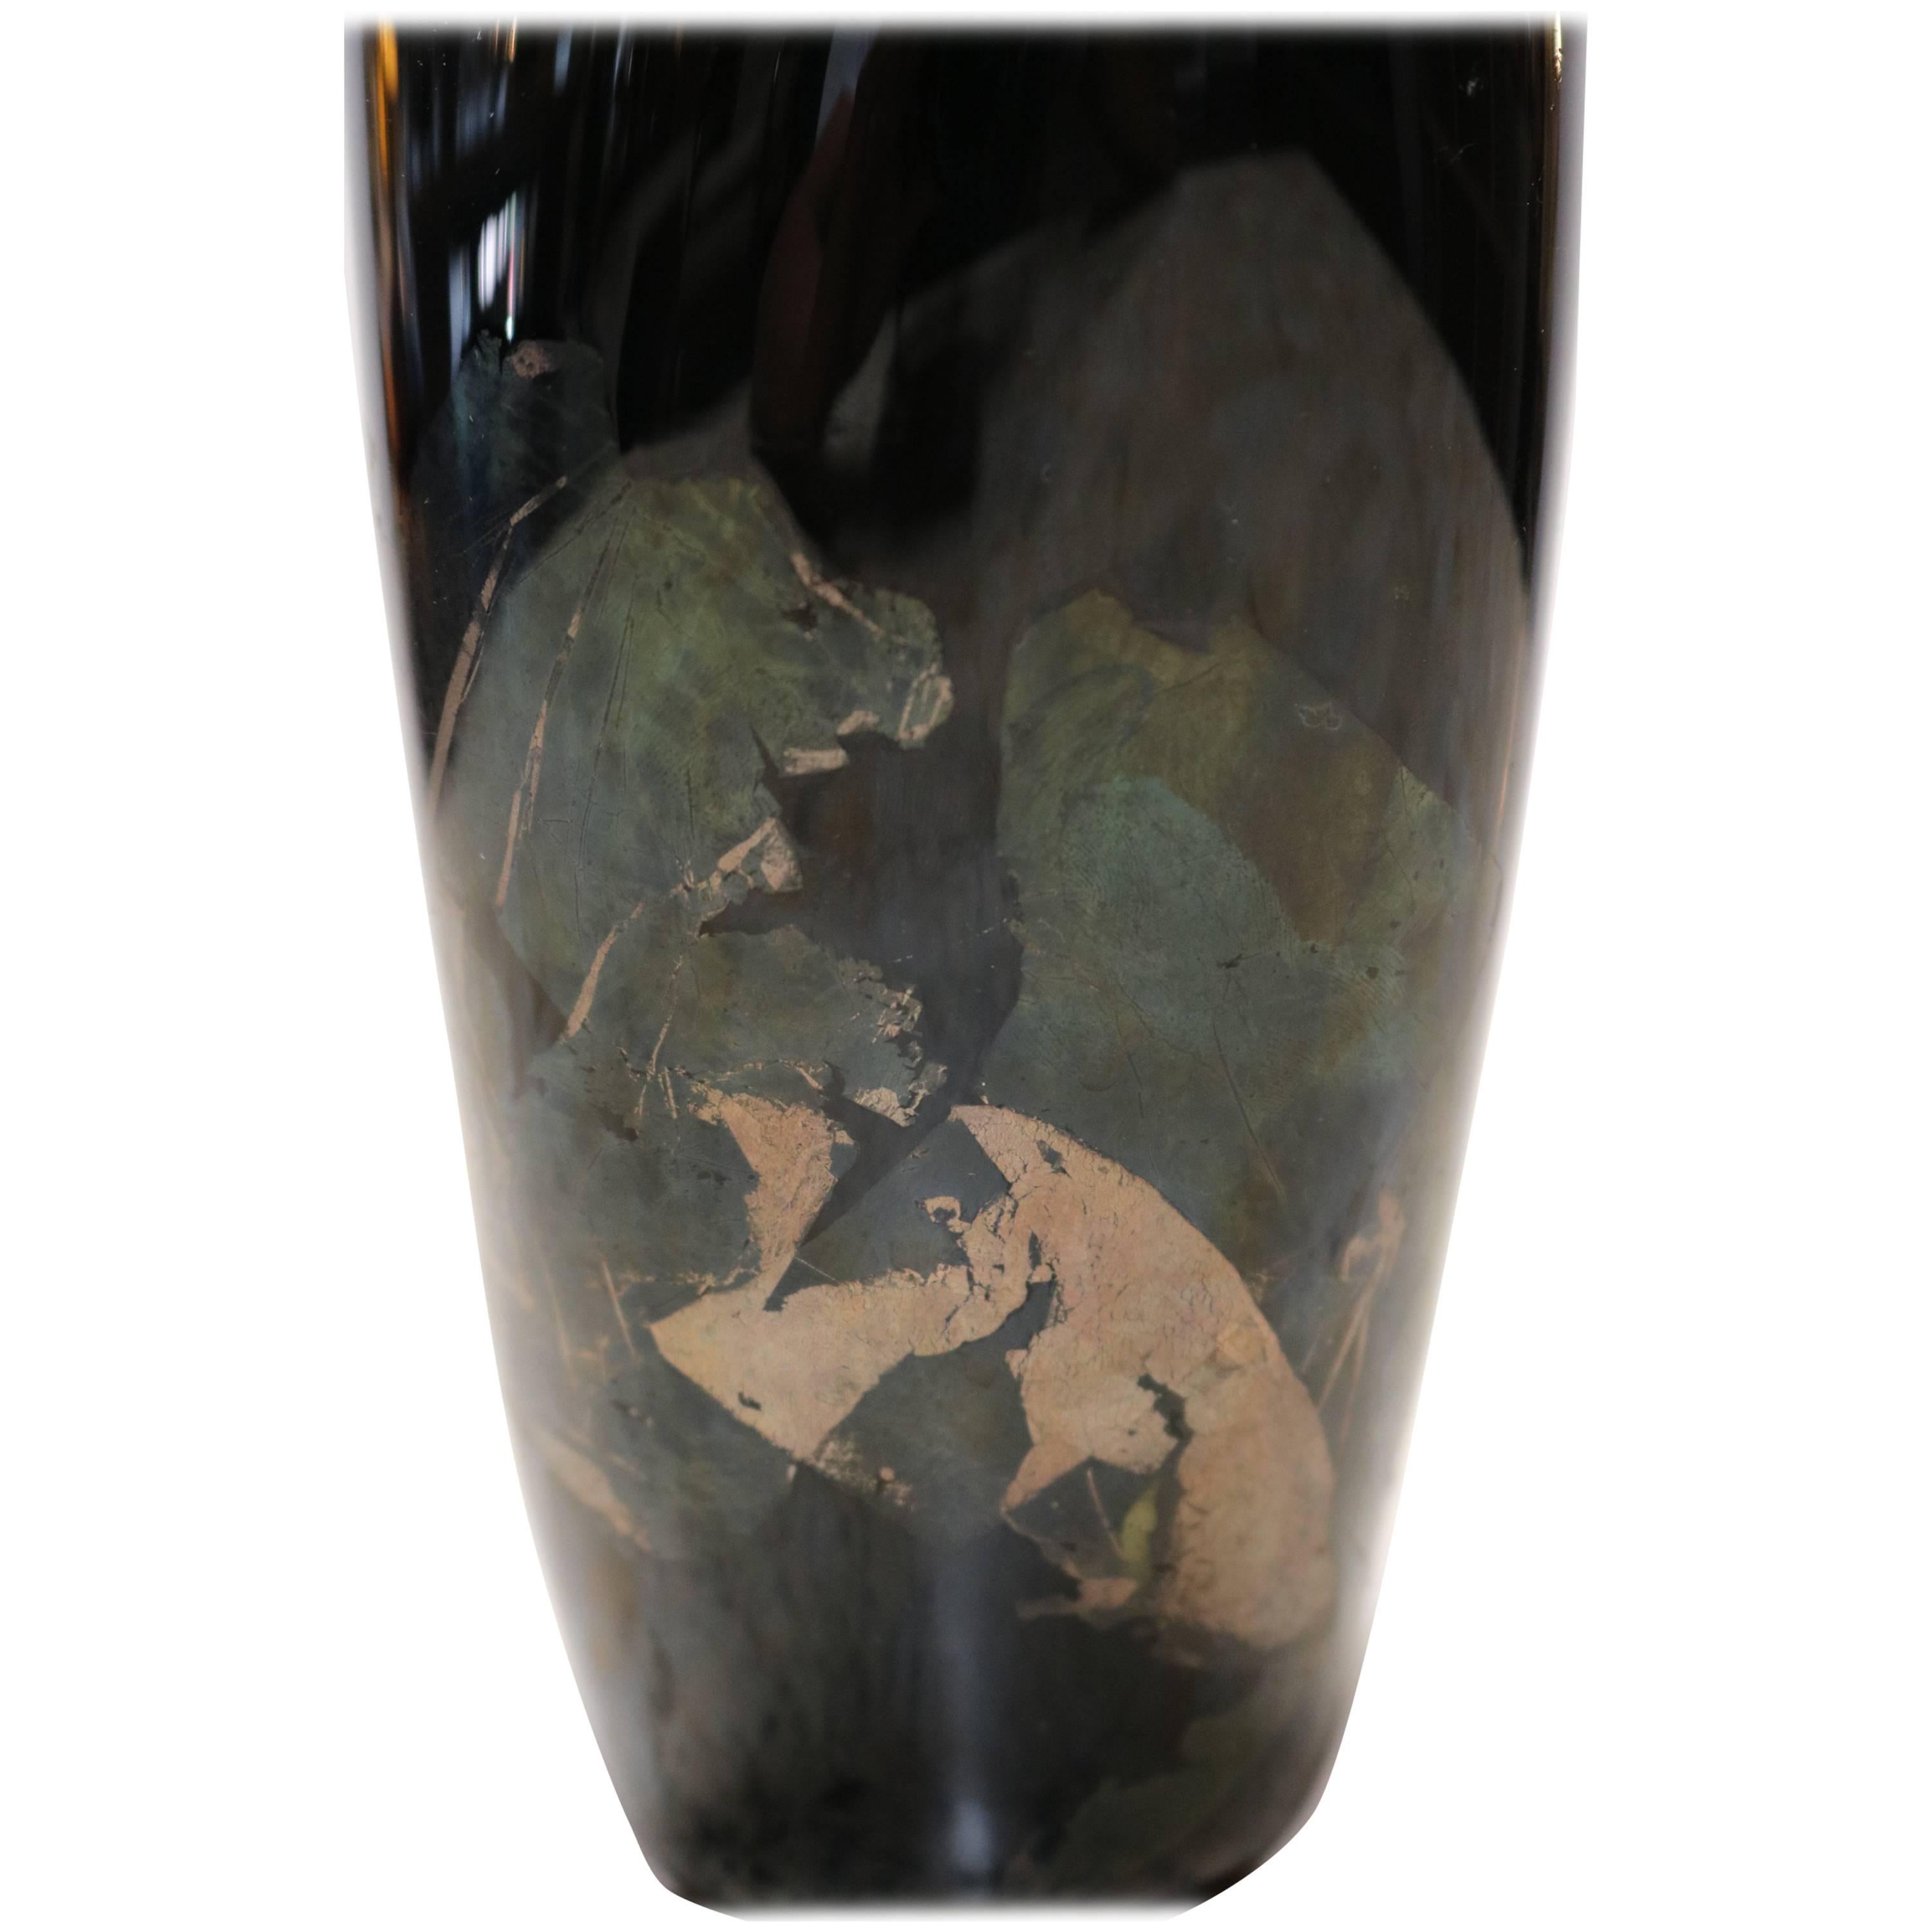 Organic Black Glass Vase with Iridescent Overlay